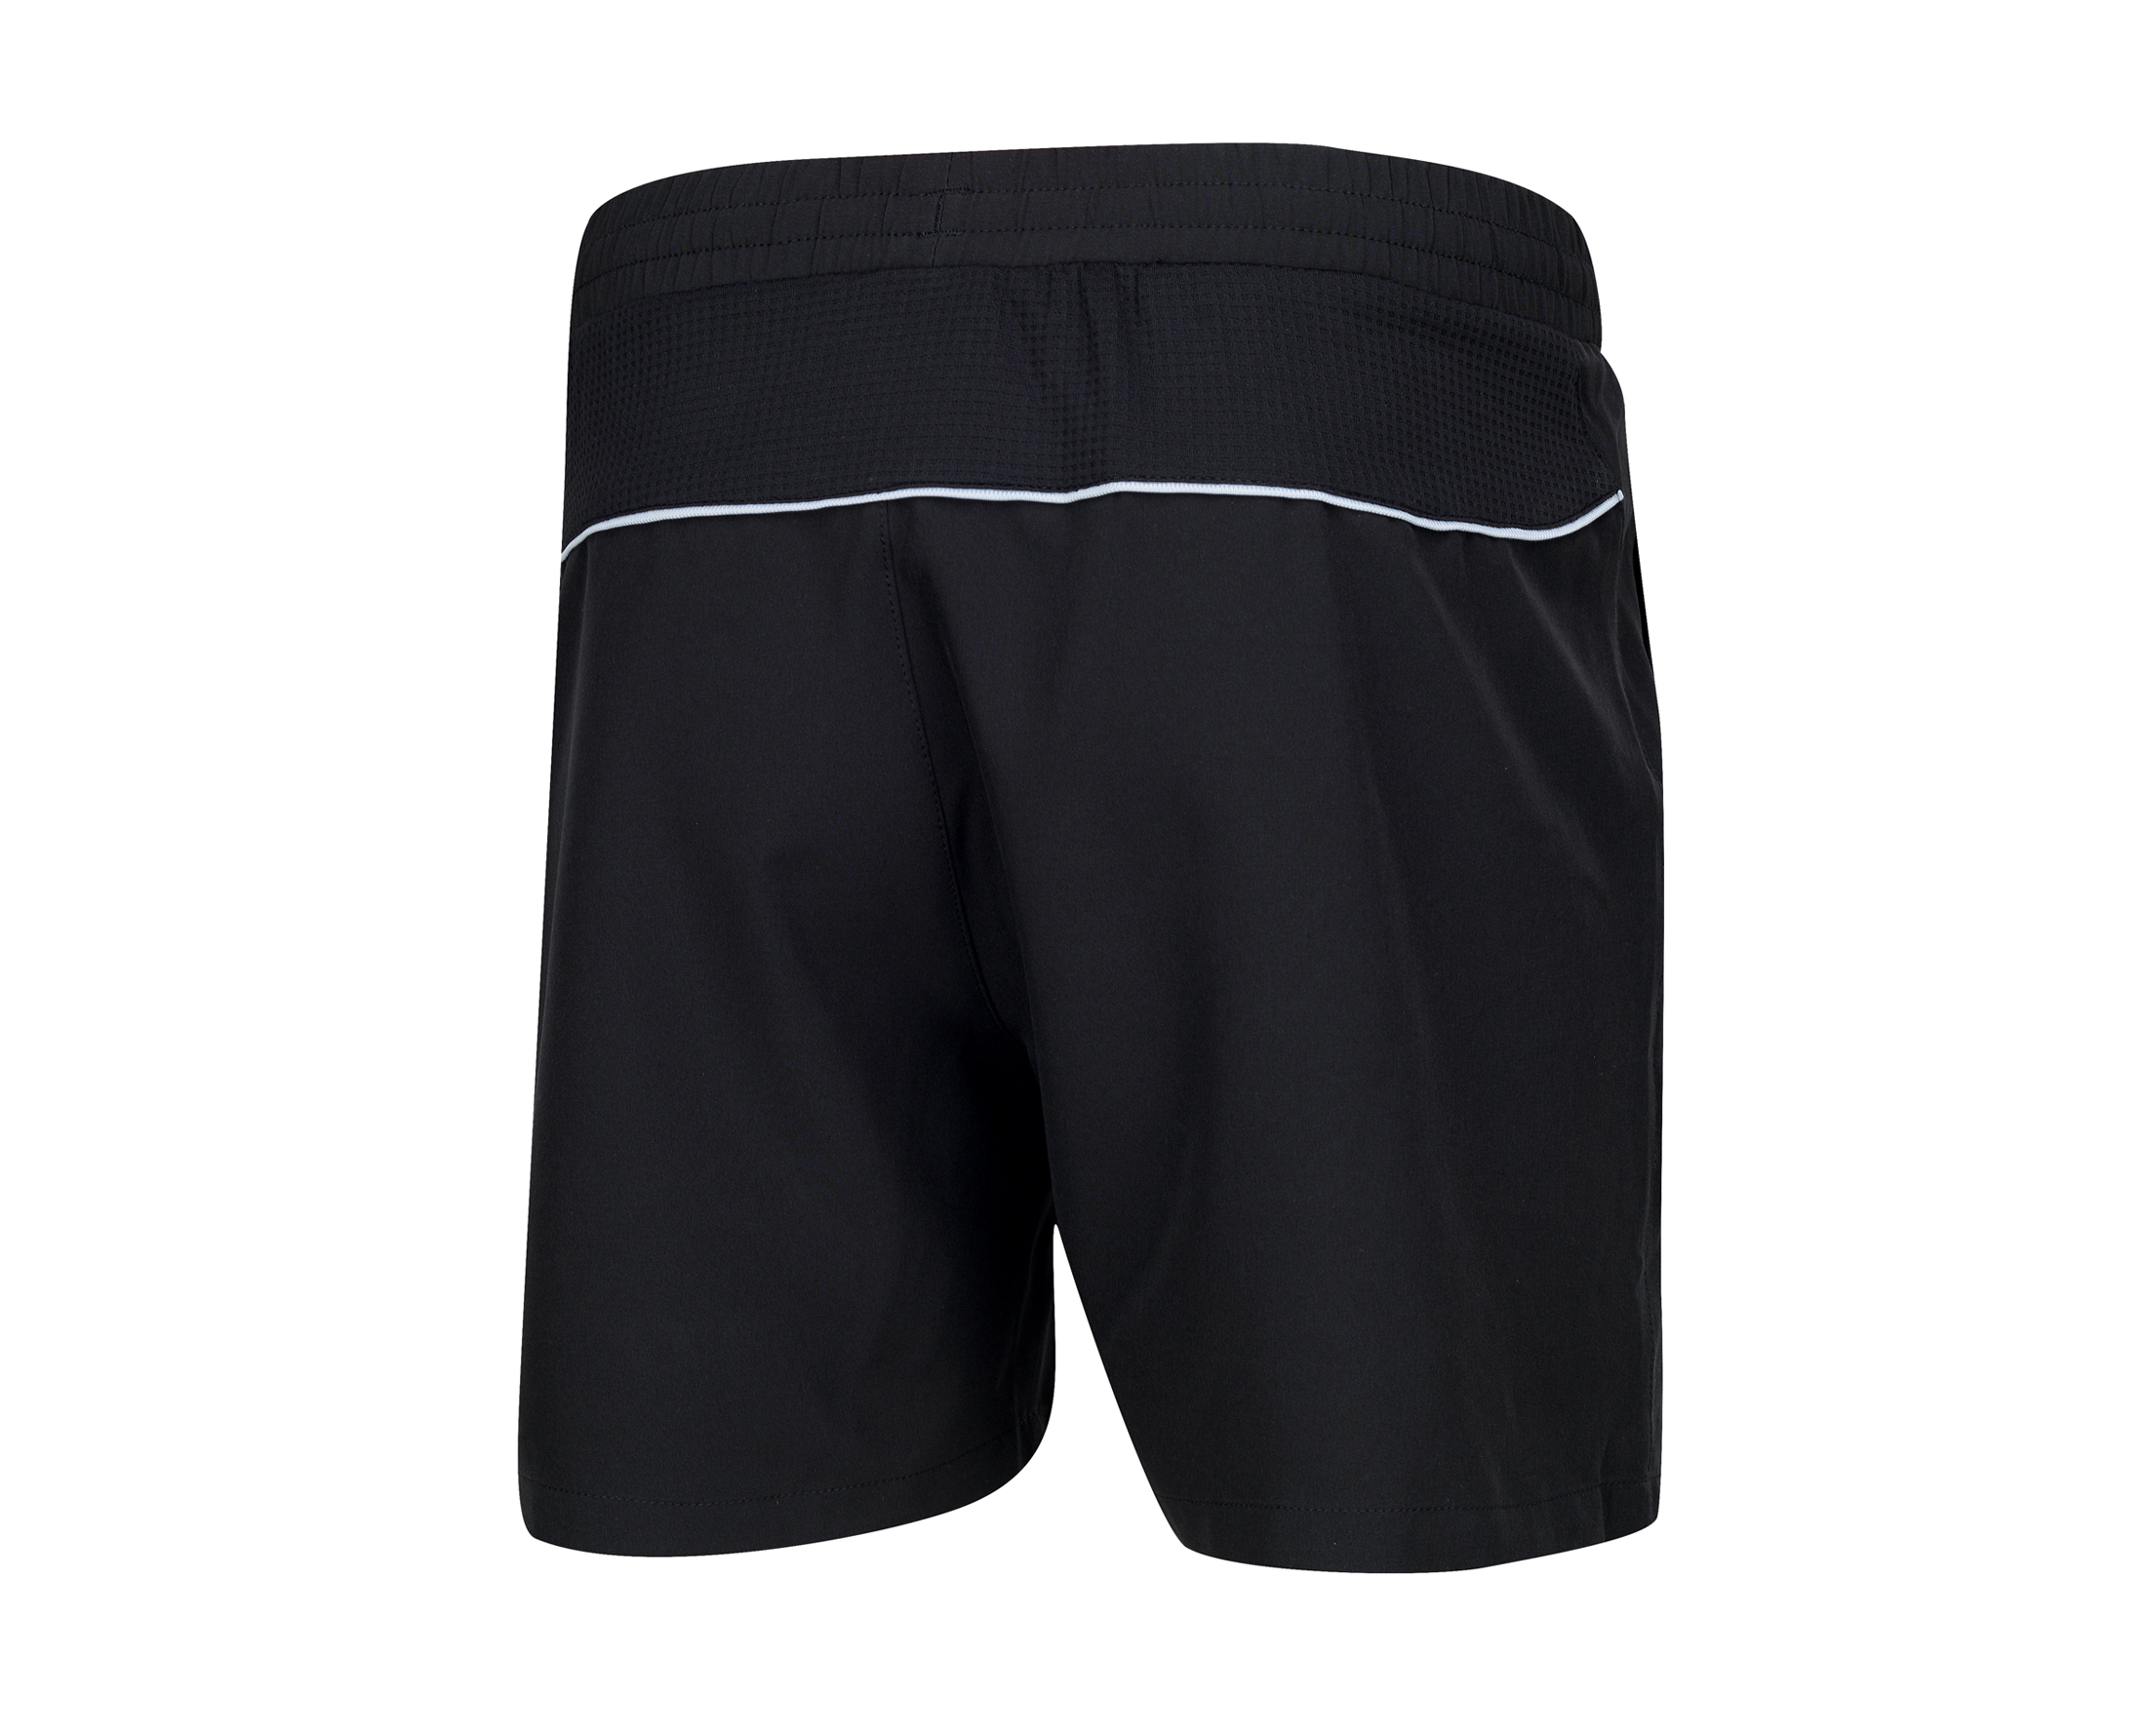 Badminton Clothes - Kid's Shorts [BLACK]